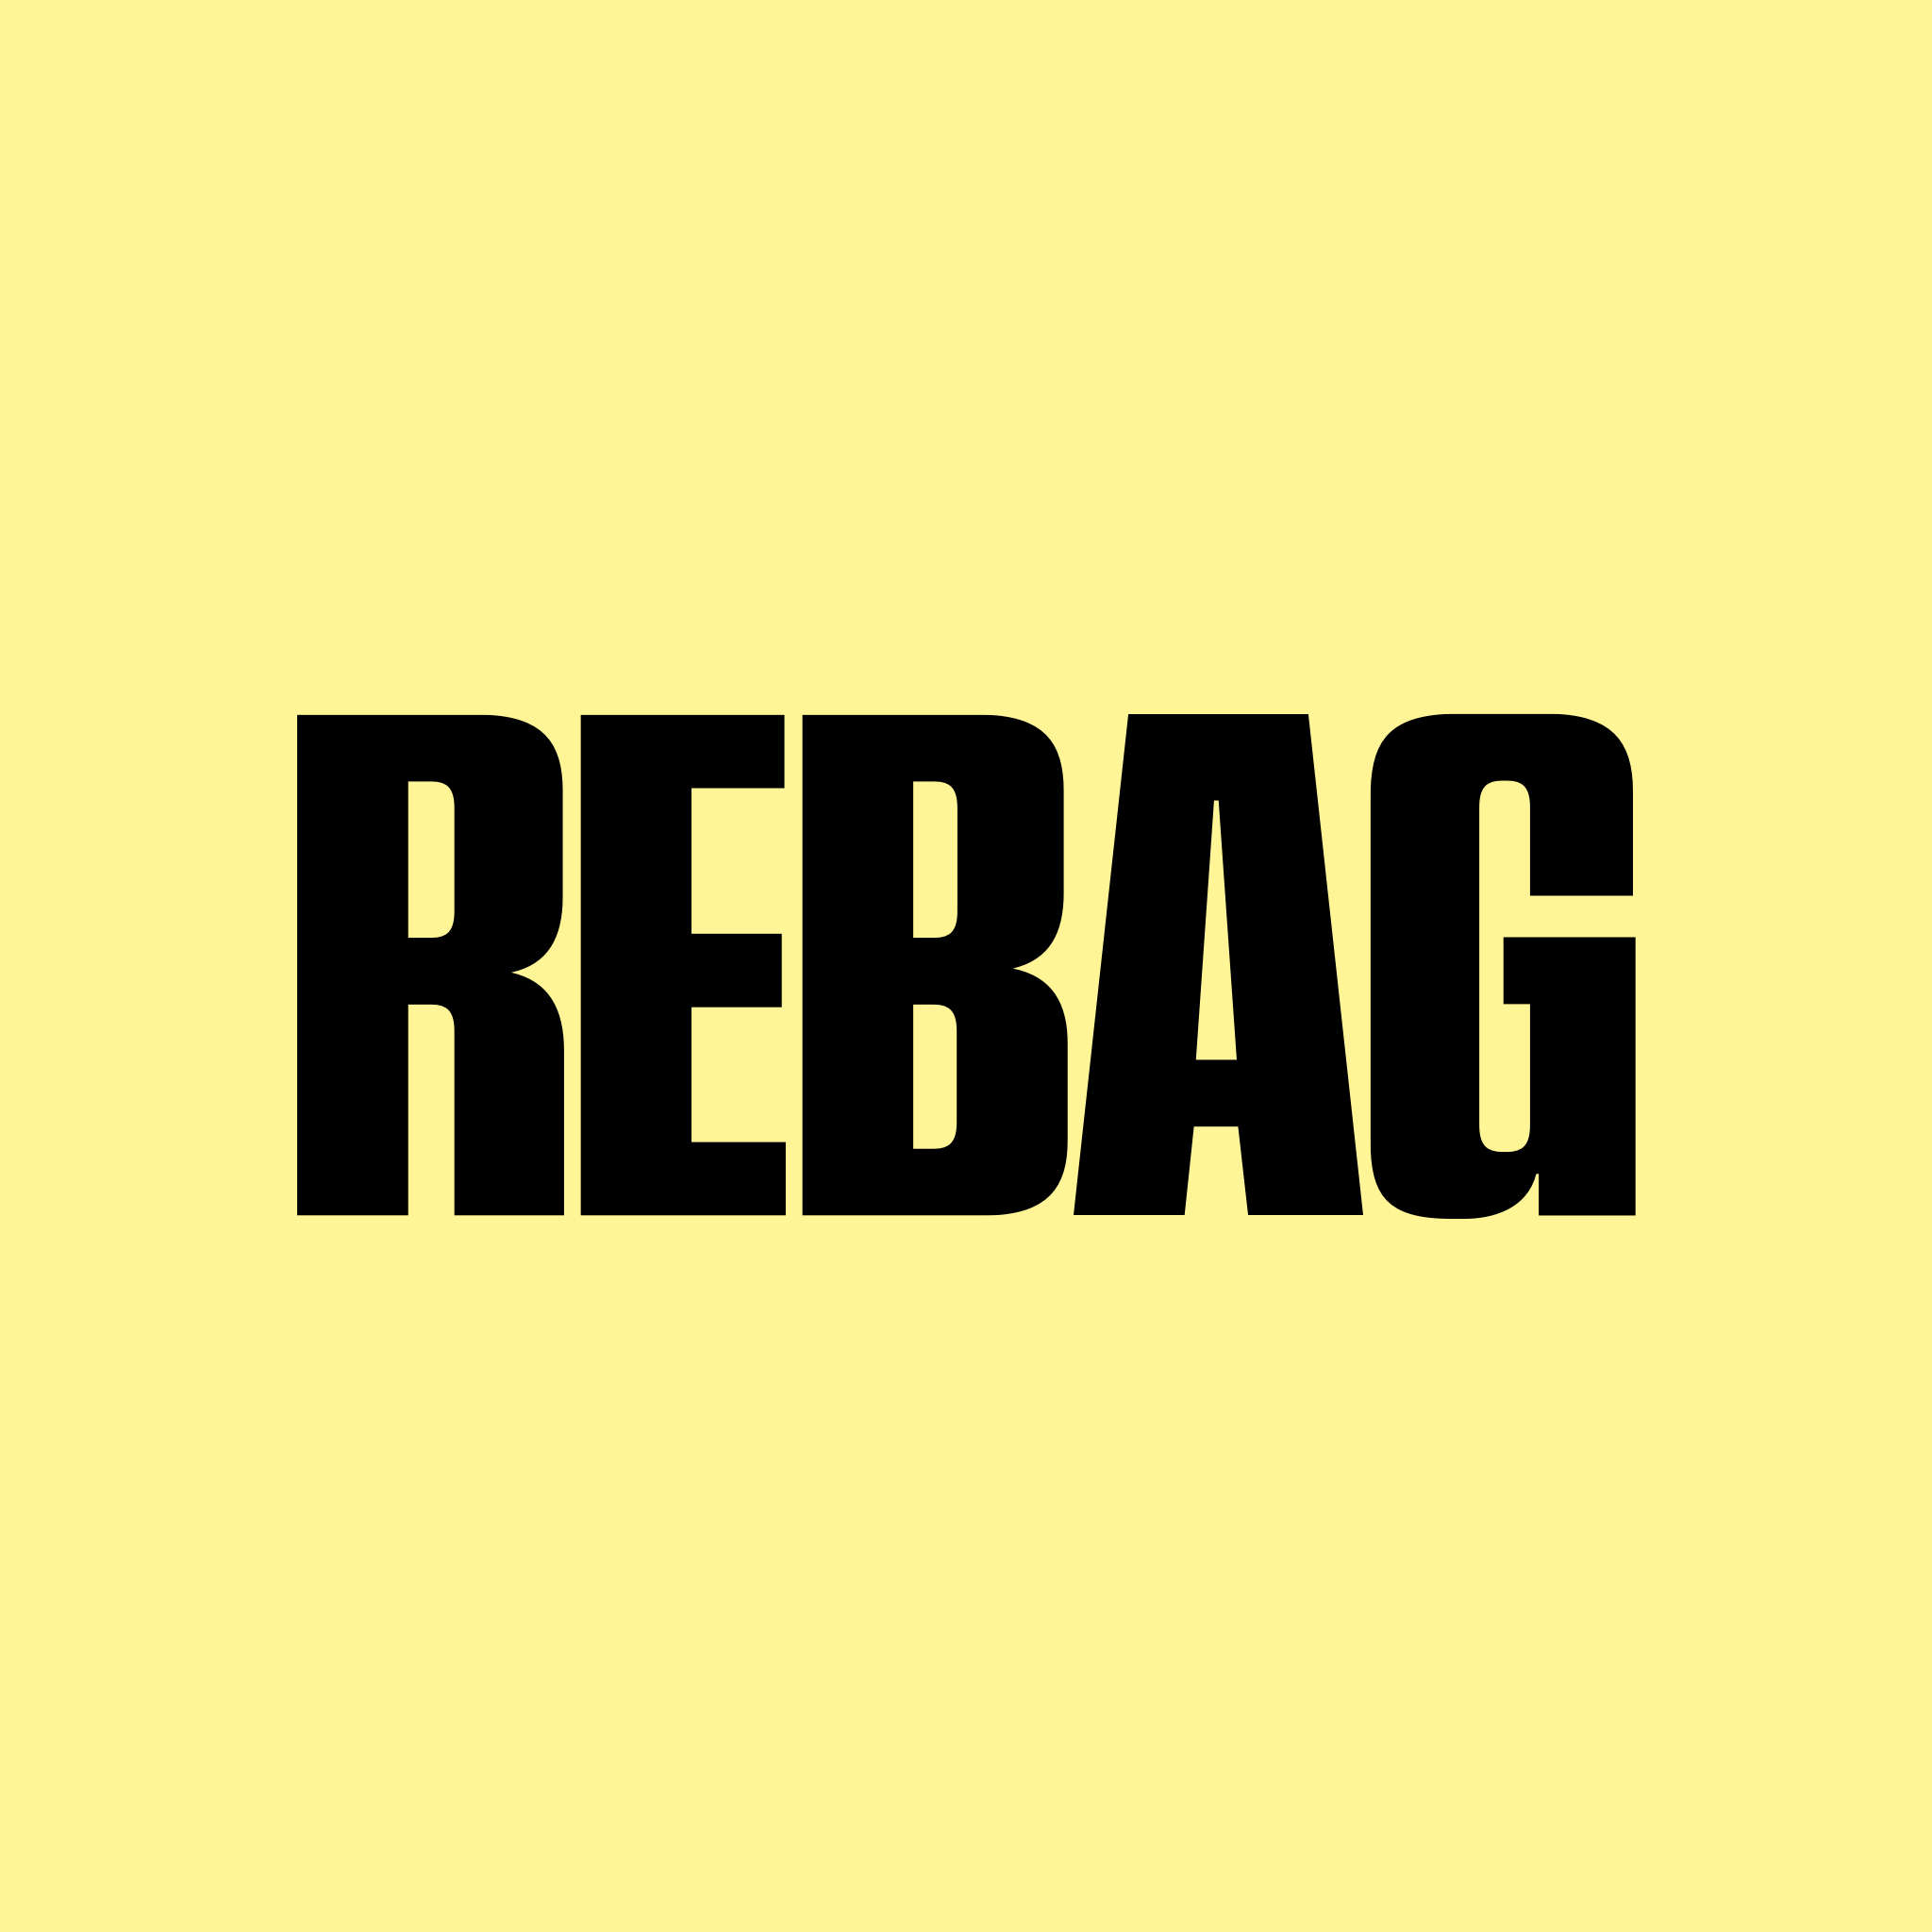 Rebag - Recent News & Activity